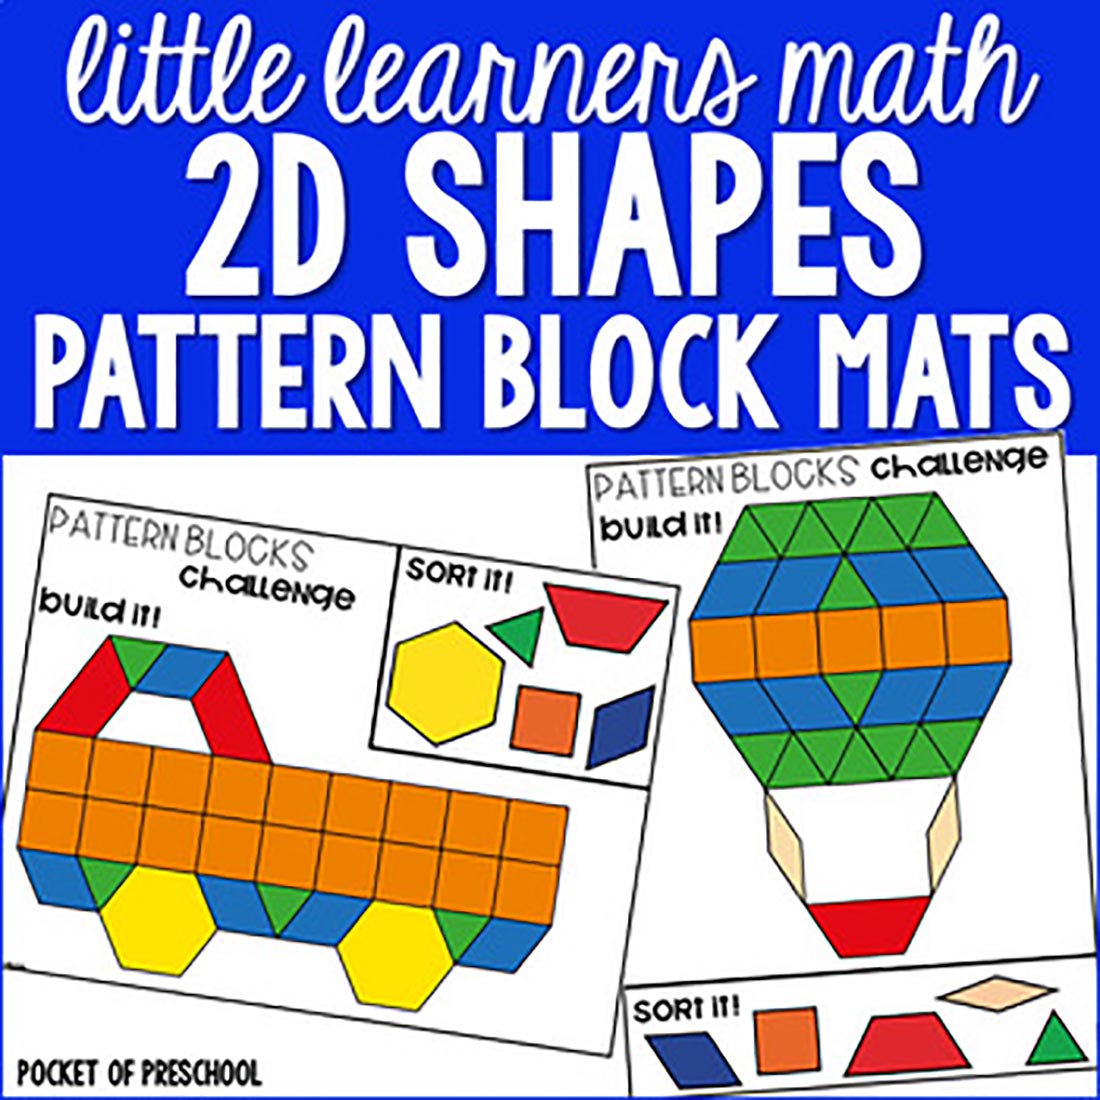 Pattern Block Mats - 2D Shapes Sample Pack for Preschool, Pre-K, and Kinder cover image.